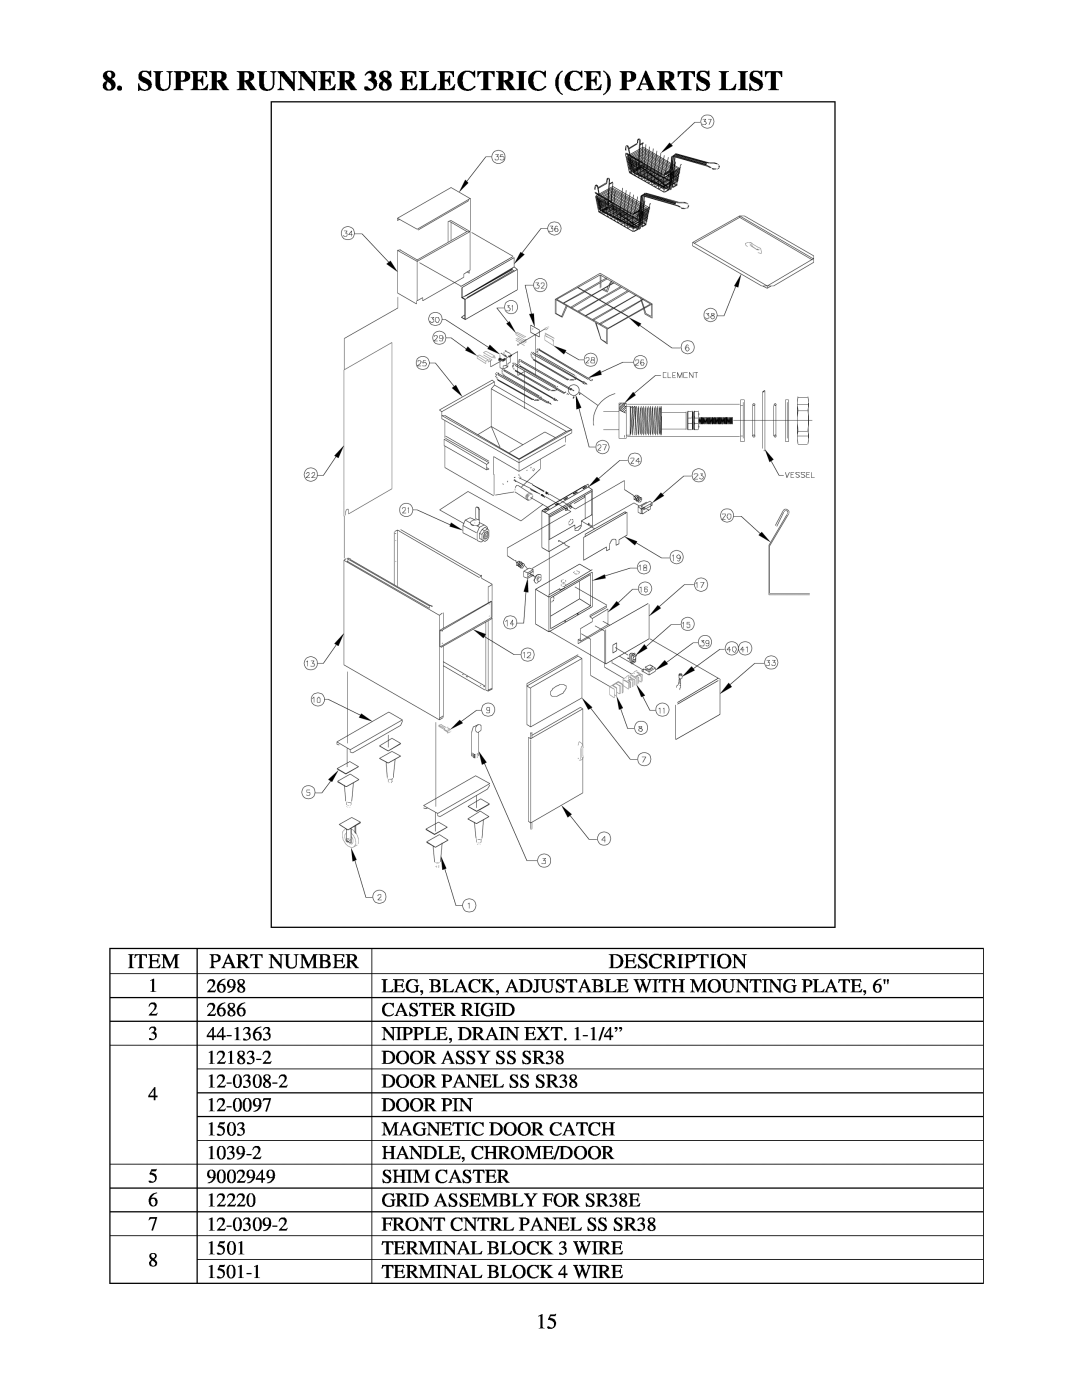 Frymaster Electric Fryer operation manual SUPER RUNNER 38 ELECTRIC CE PARTS LIST, Part Number, Description 